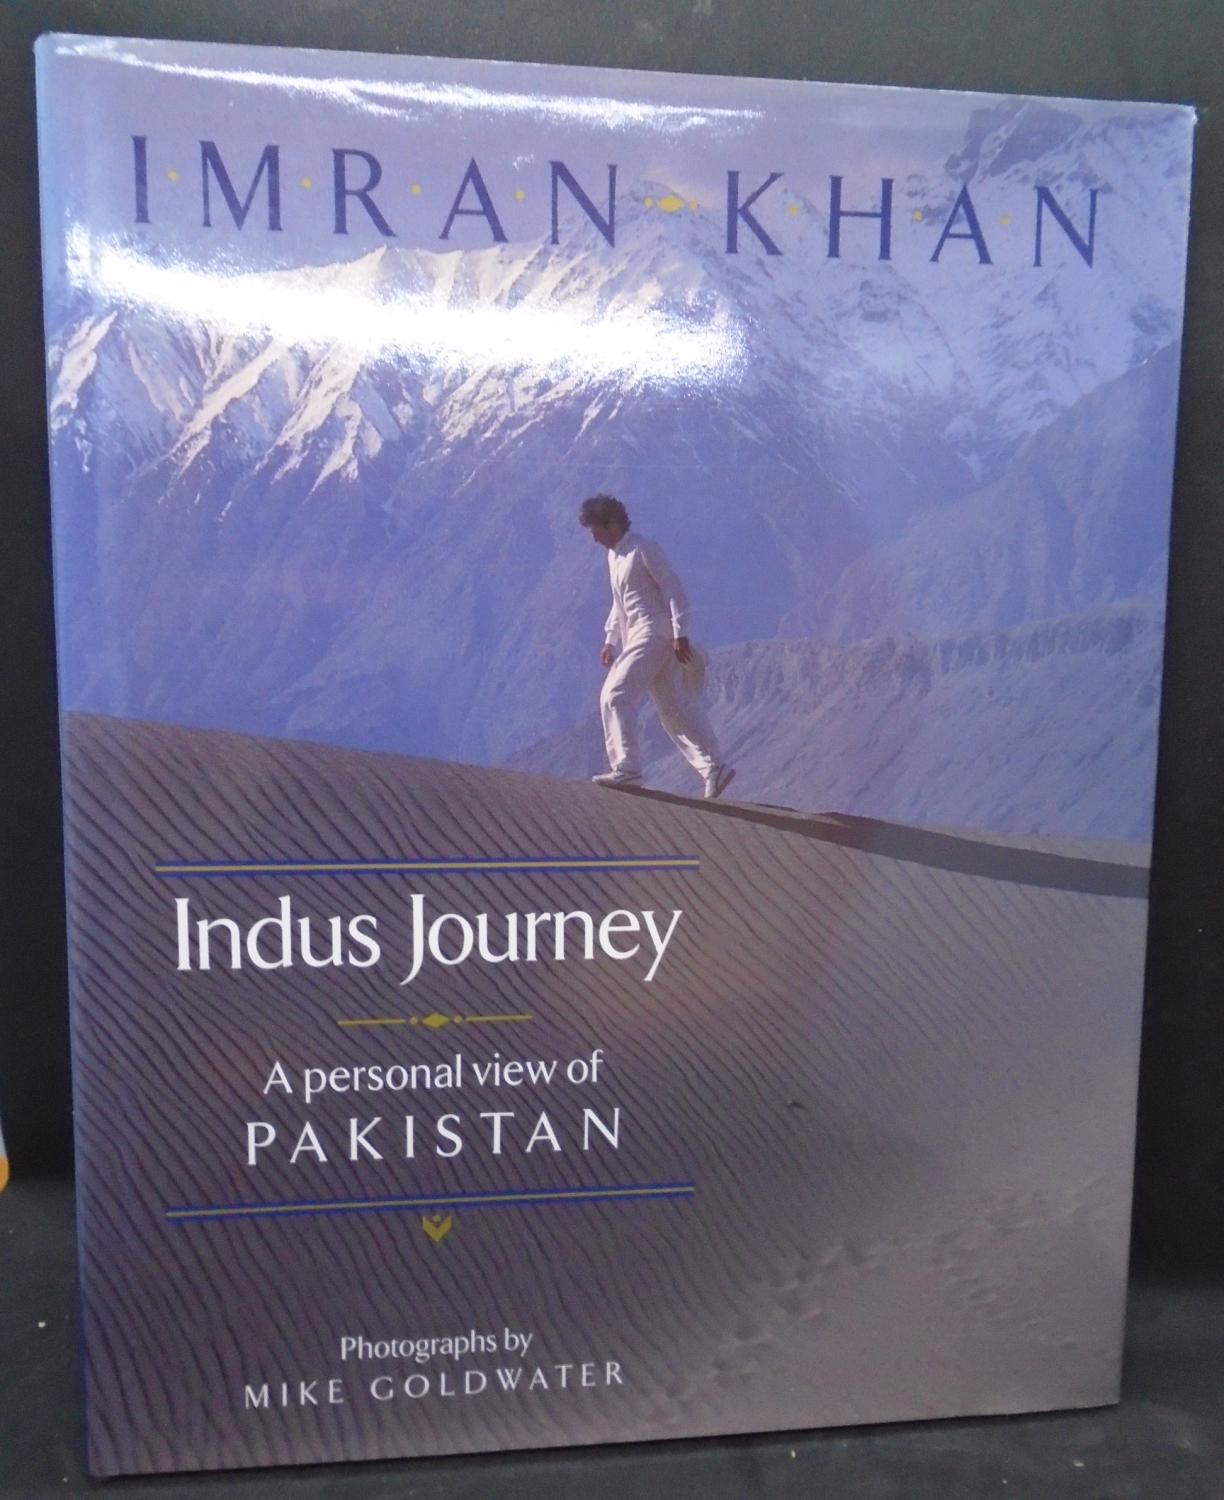 indus journey by imran khan